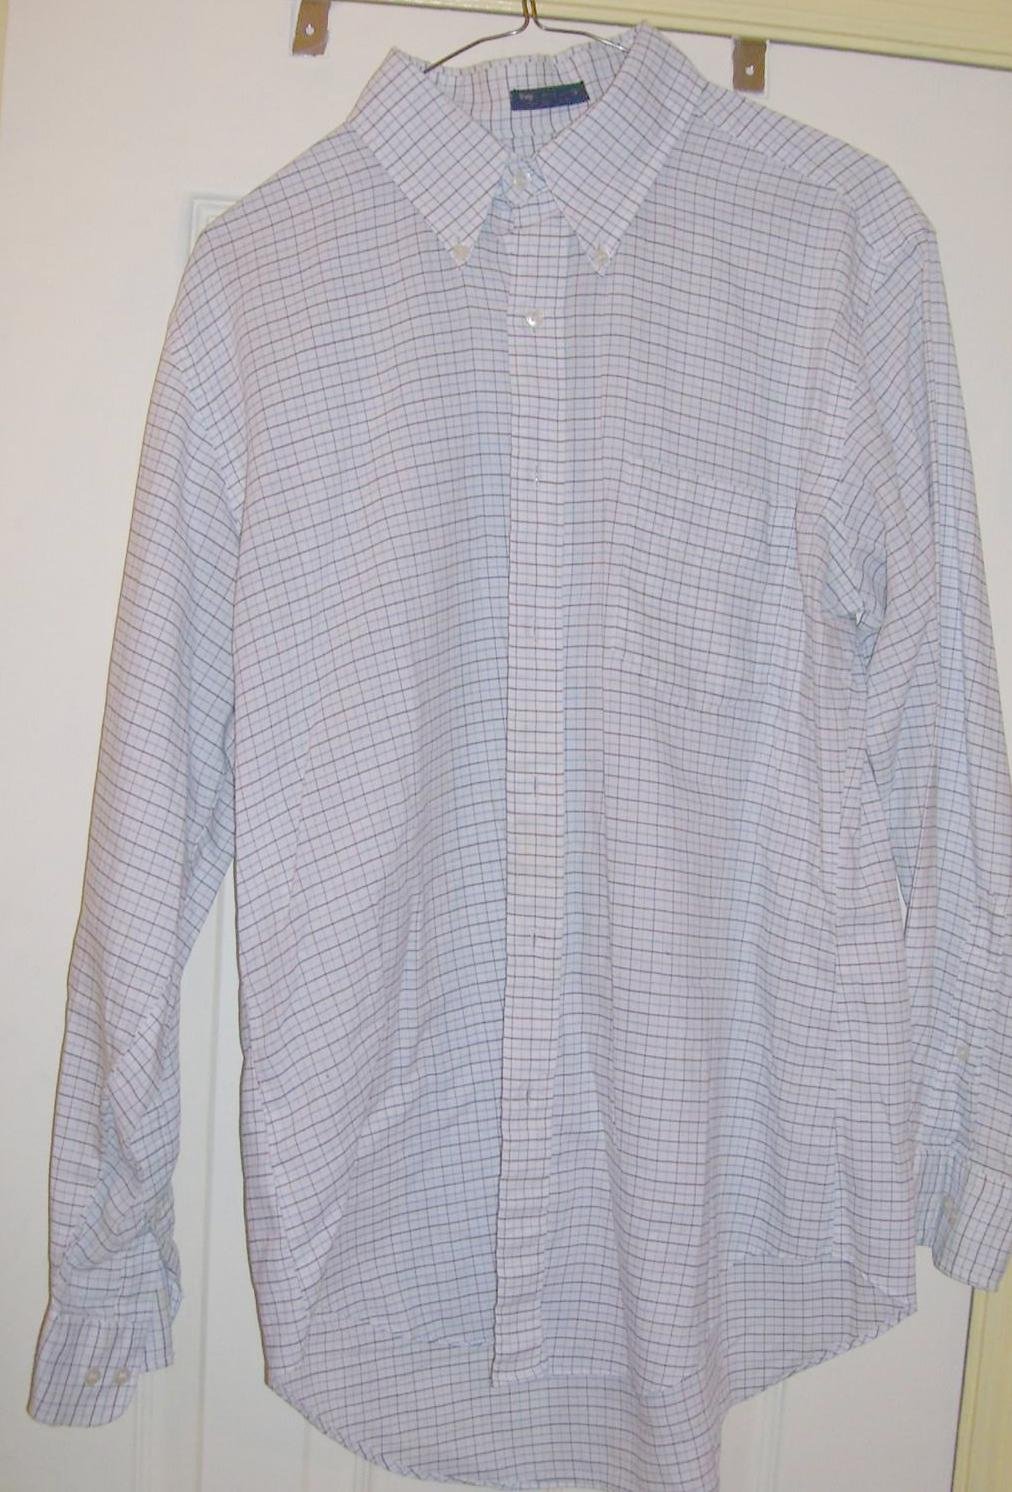 Vintage Men's Private Club Striped Shirt, Size: 16